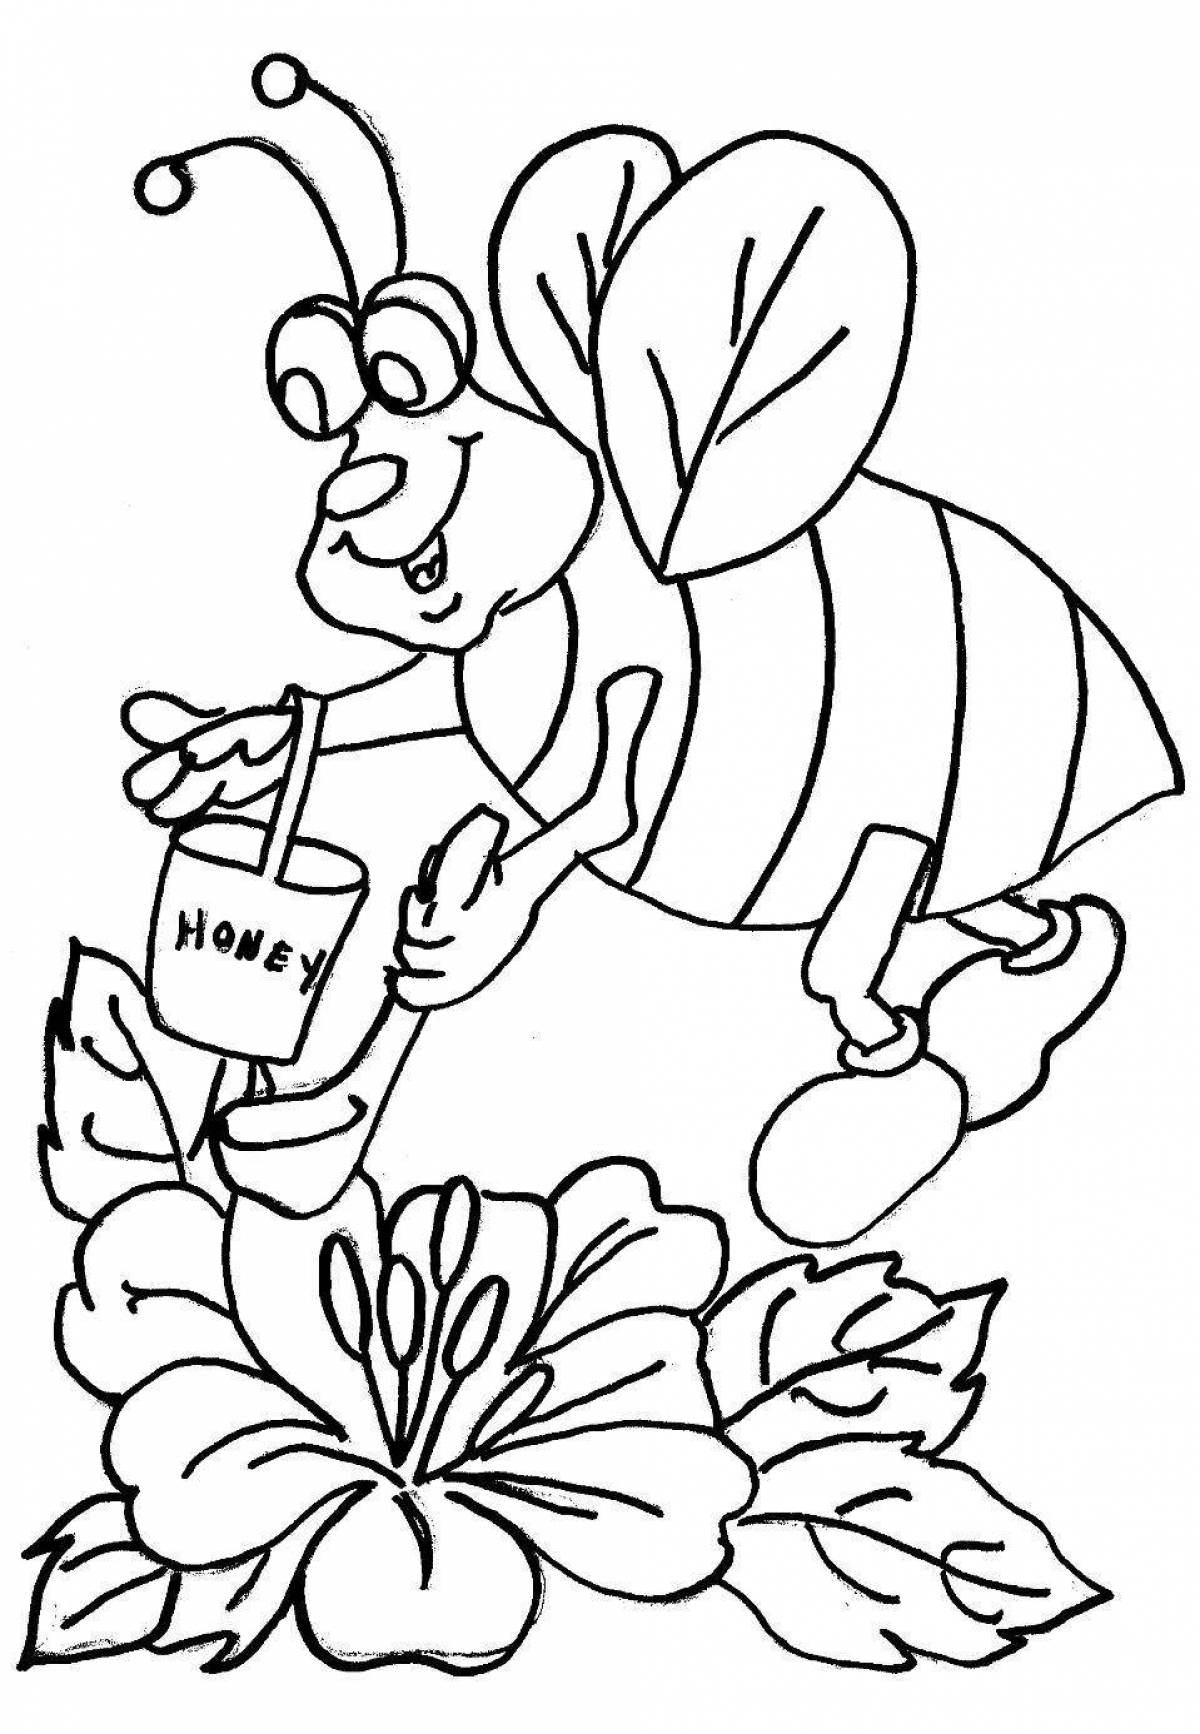 Пчелка раскраска распечатать. Пчела раскраска. Пчела раскраска для детей. Раскраска пчёлка для детей. Раскраска Пчелка на цветке.